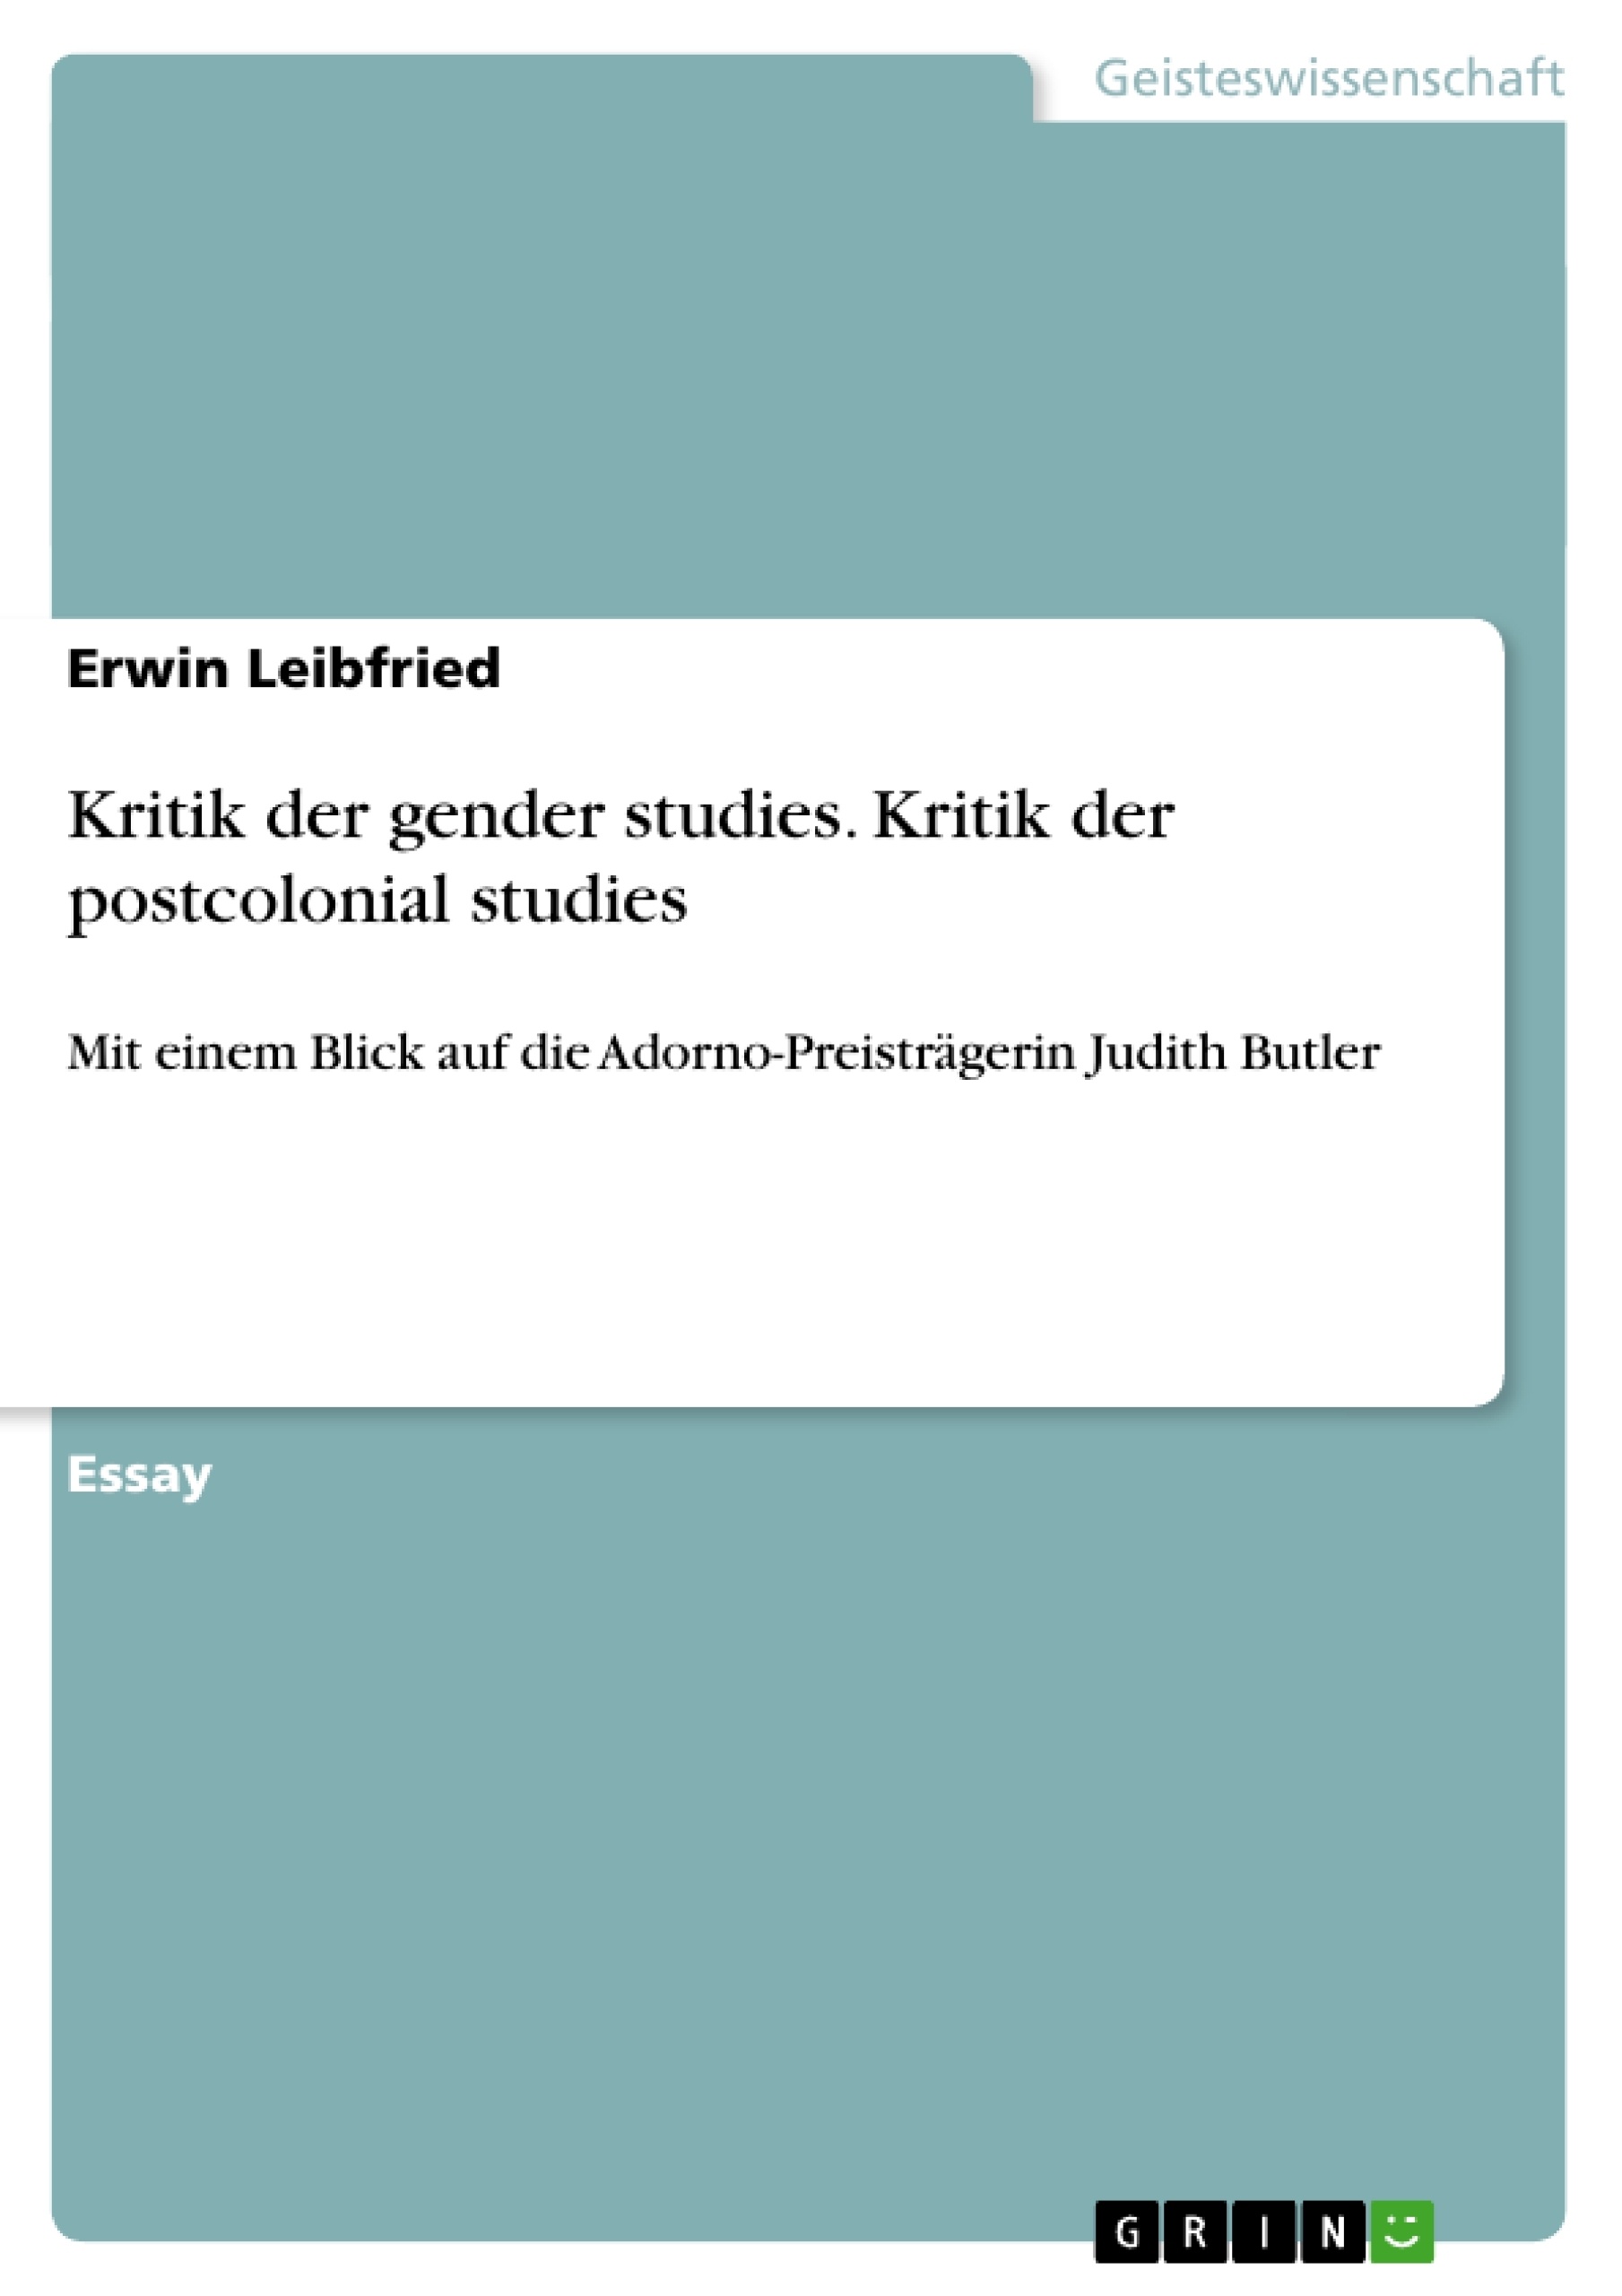 Título: Kritik der gender studies. Kritik der postcolonial studies